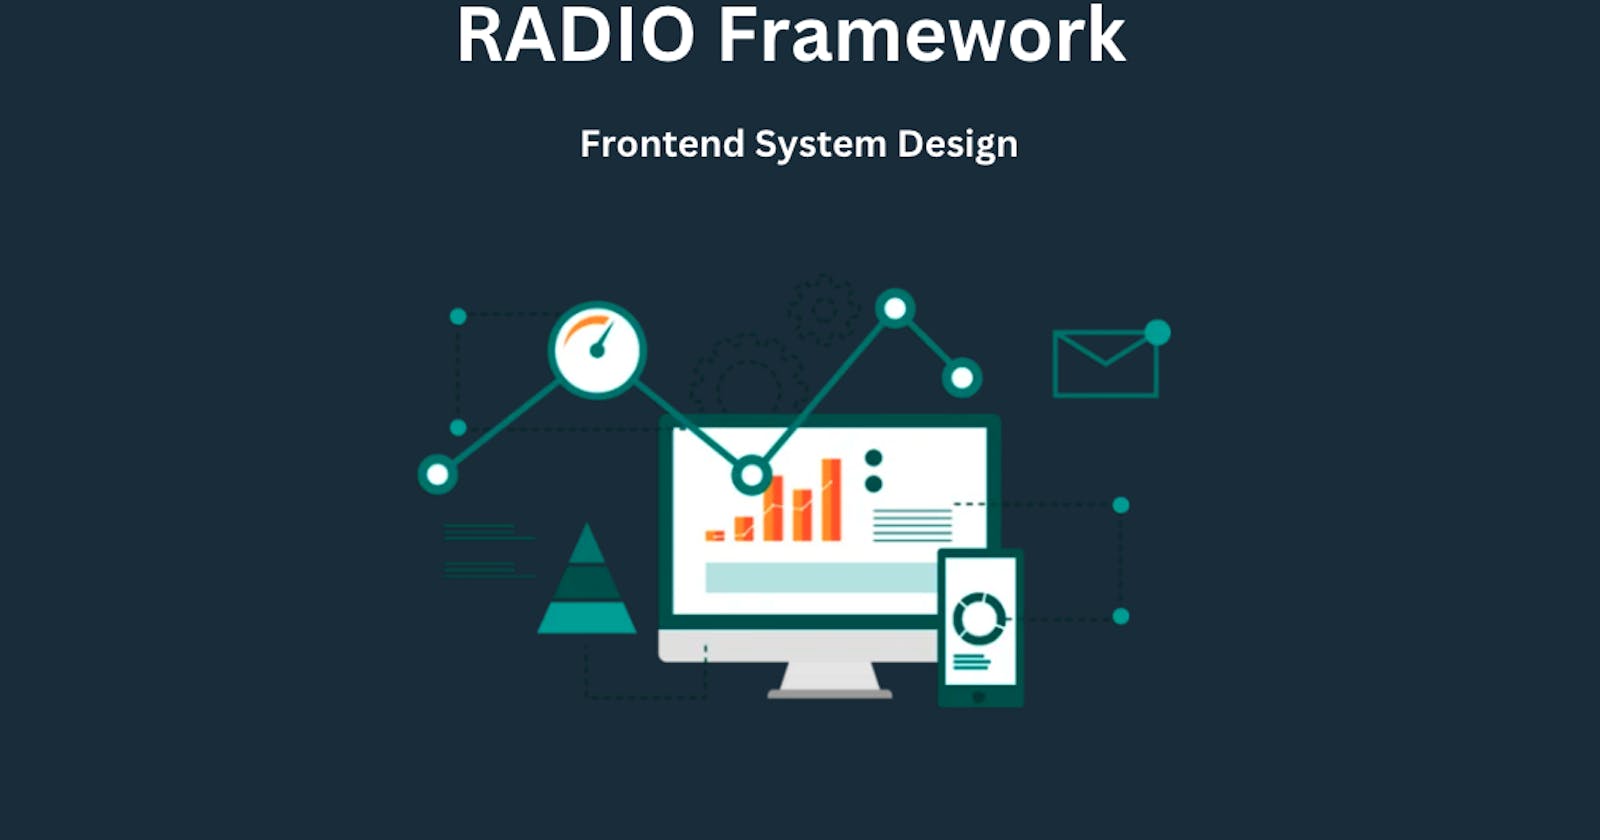 RADIO Framework Overview